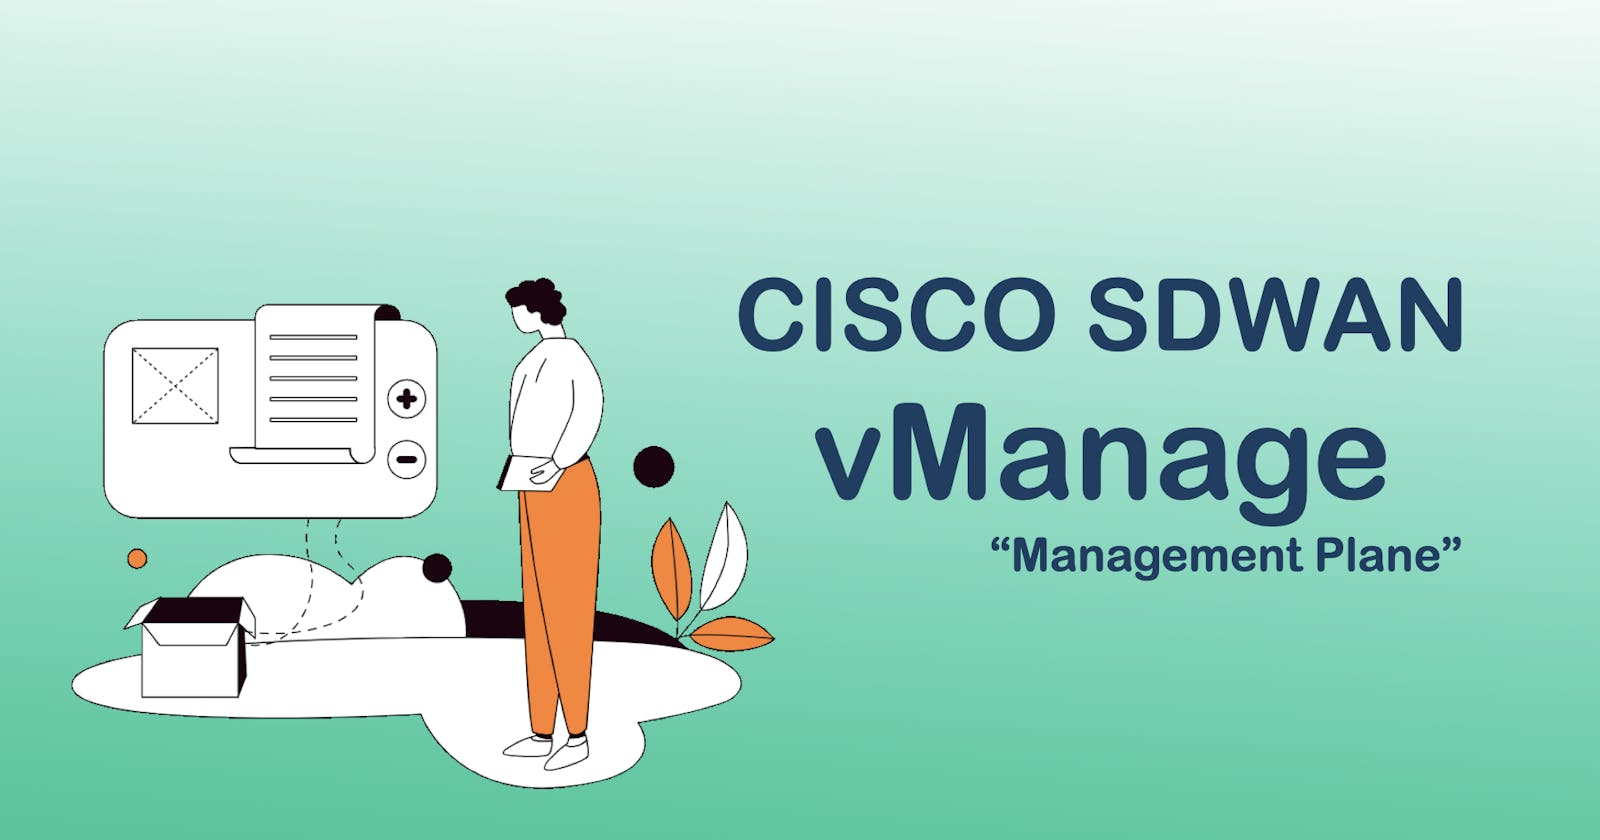 [Part 4] Cisco SDWAN - vManage Controllers